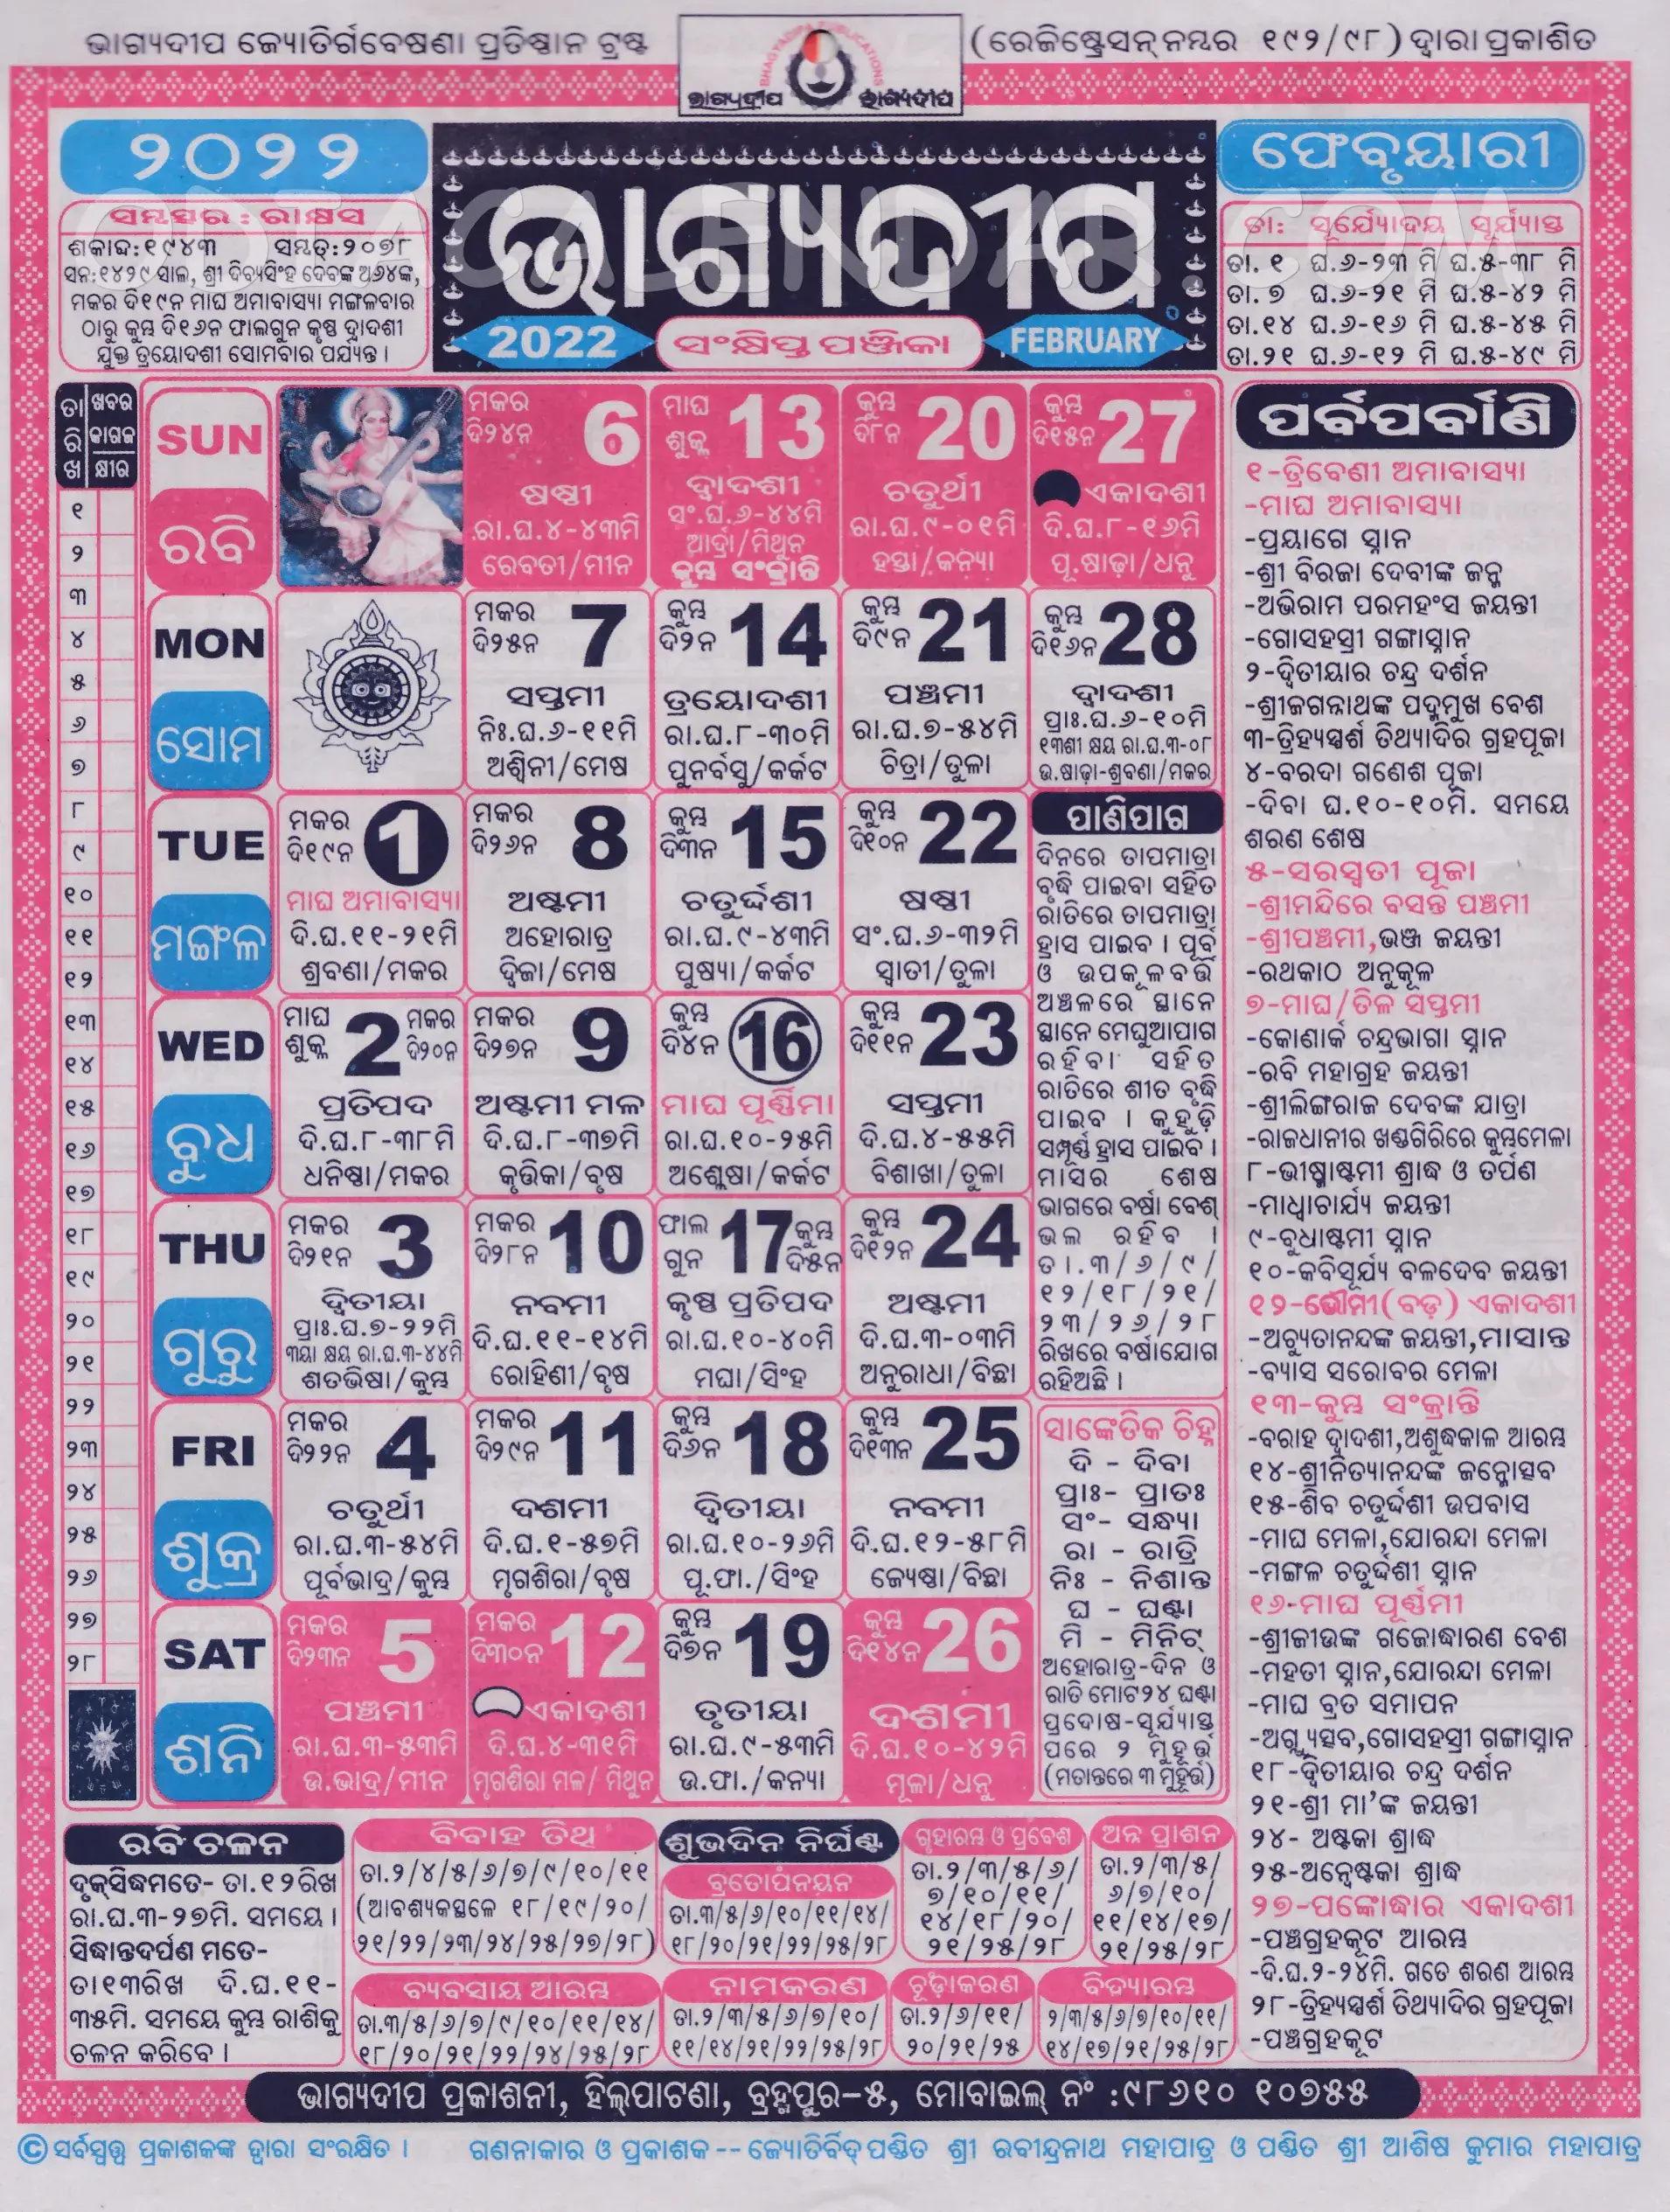 Bhagyadeep Calendar 2022 February